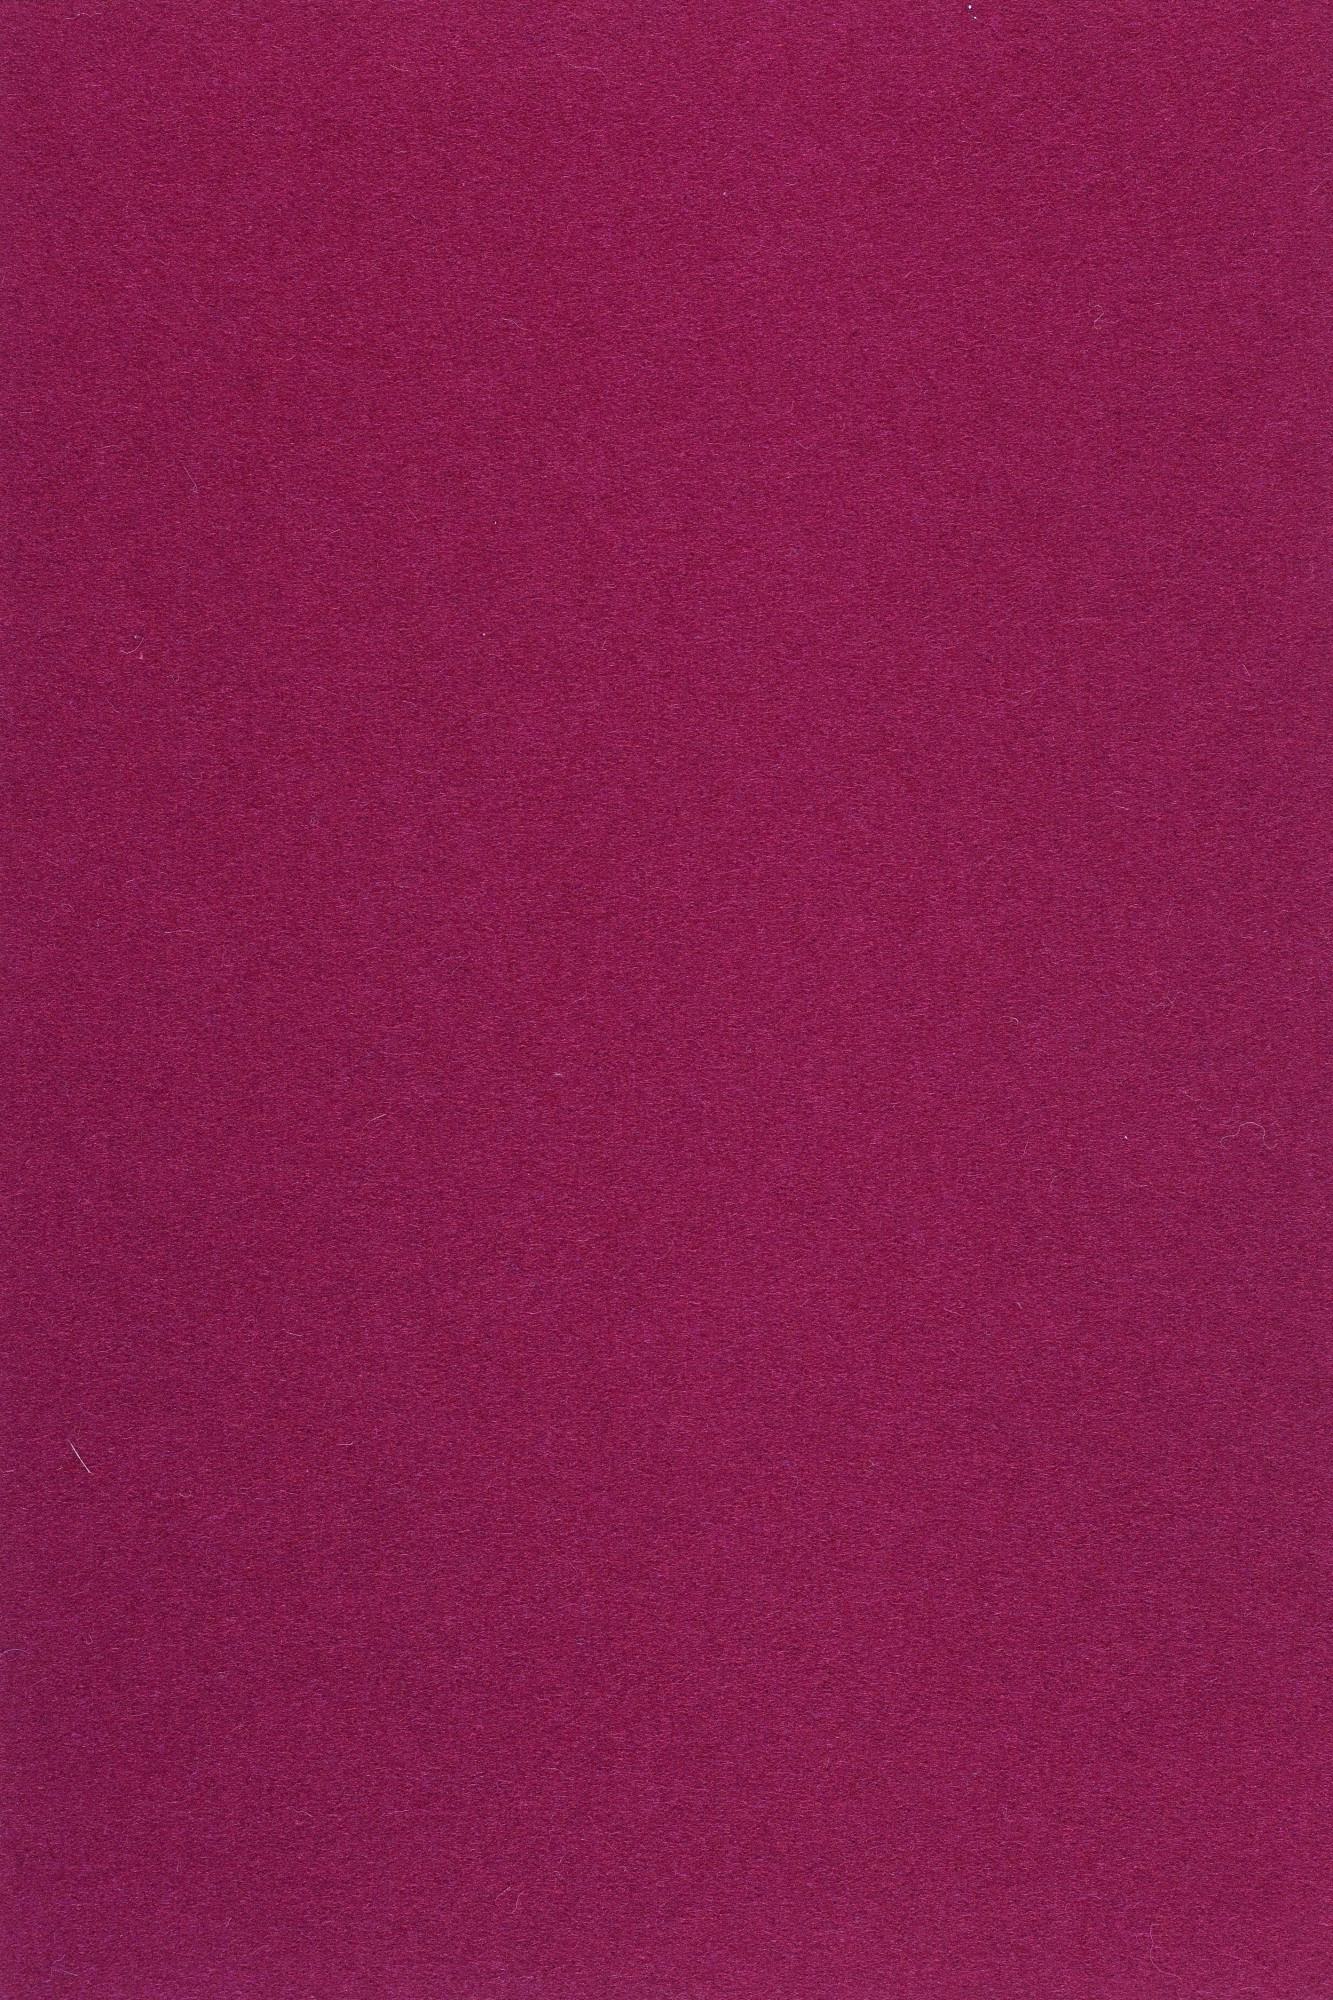 Fabric sample Divina 3 652 purple